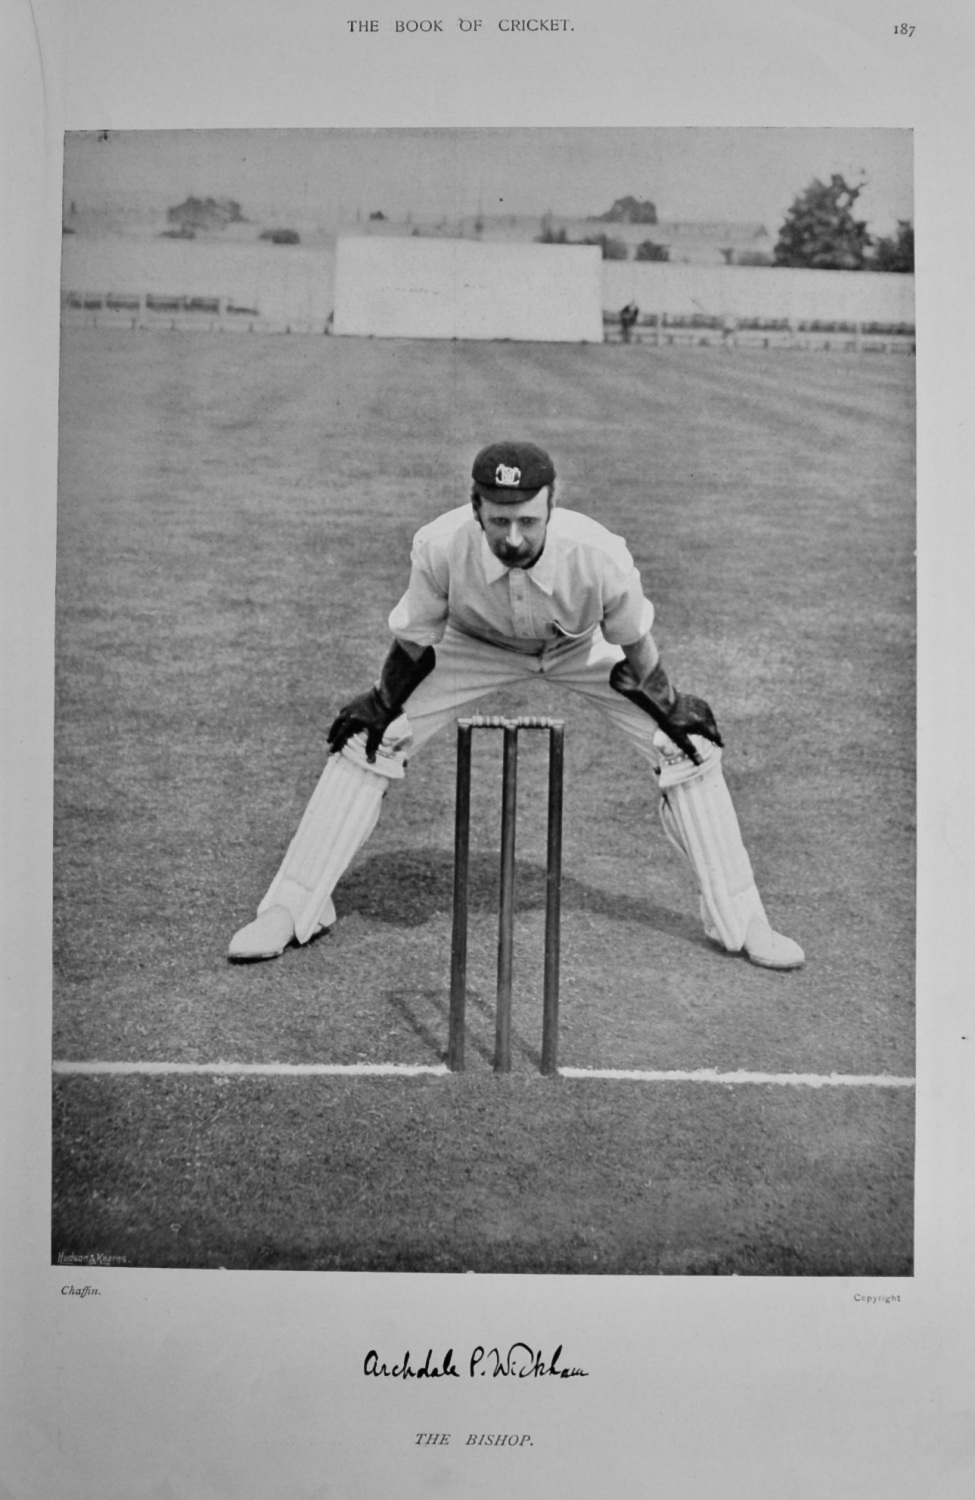 Archdale Palmer Wickham.  1899.  (Cricketer).